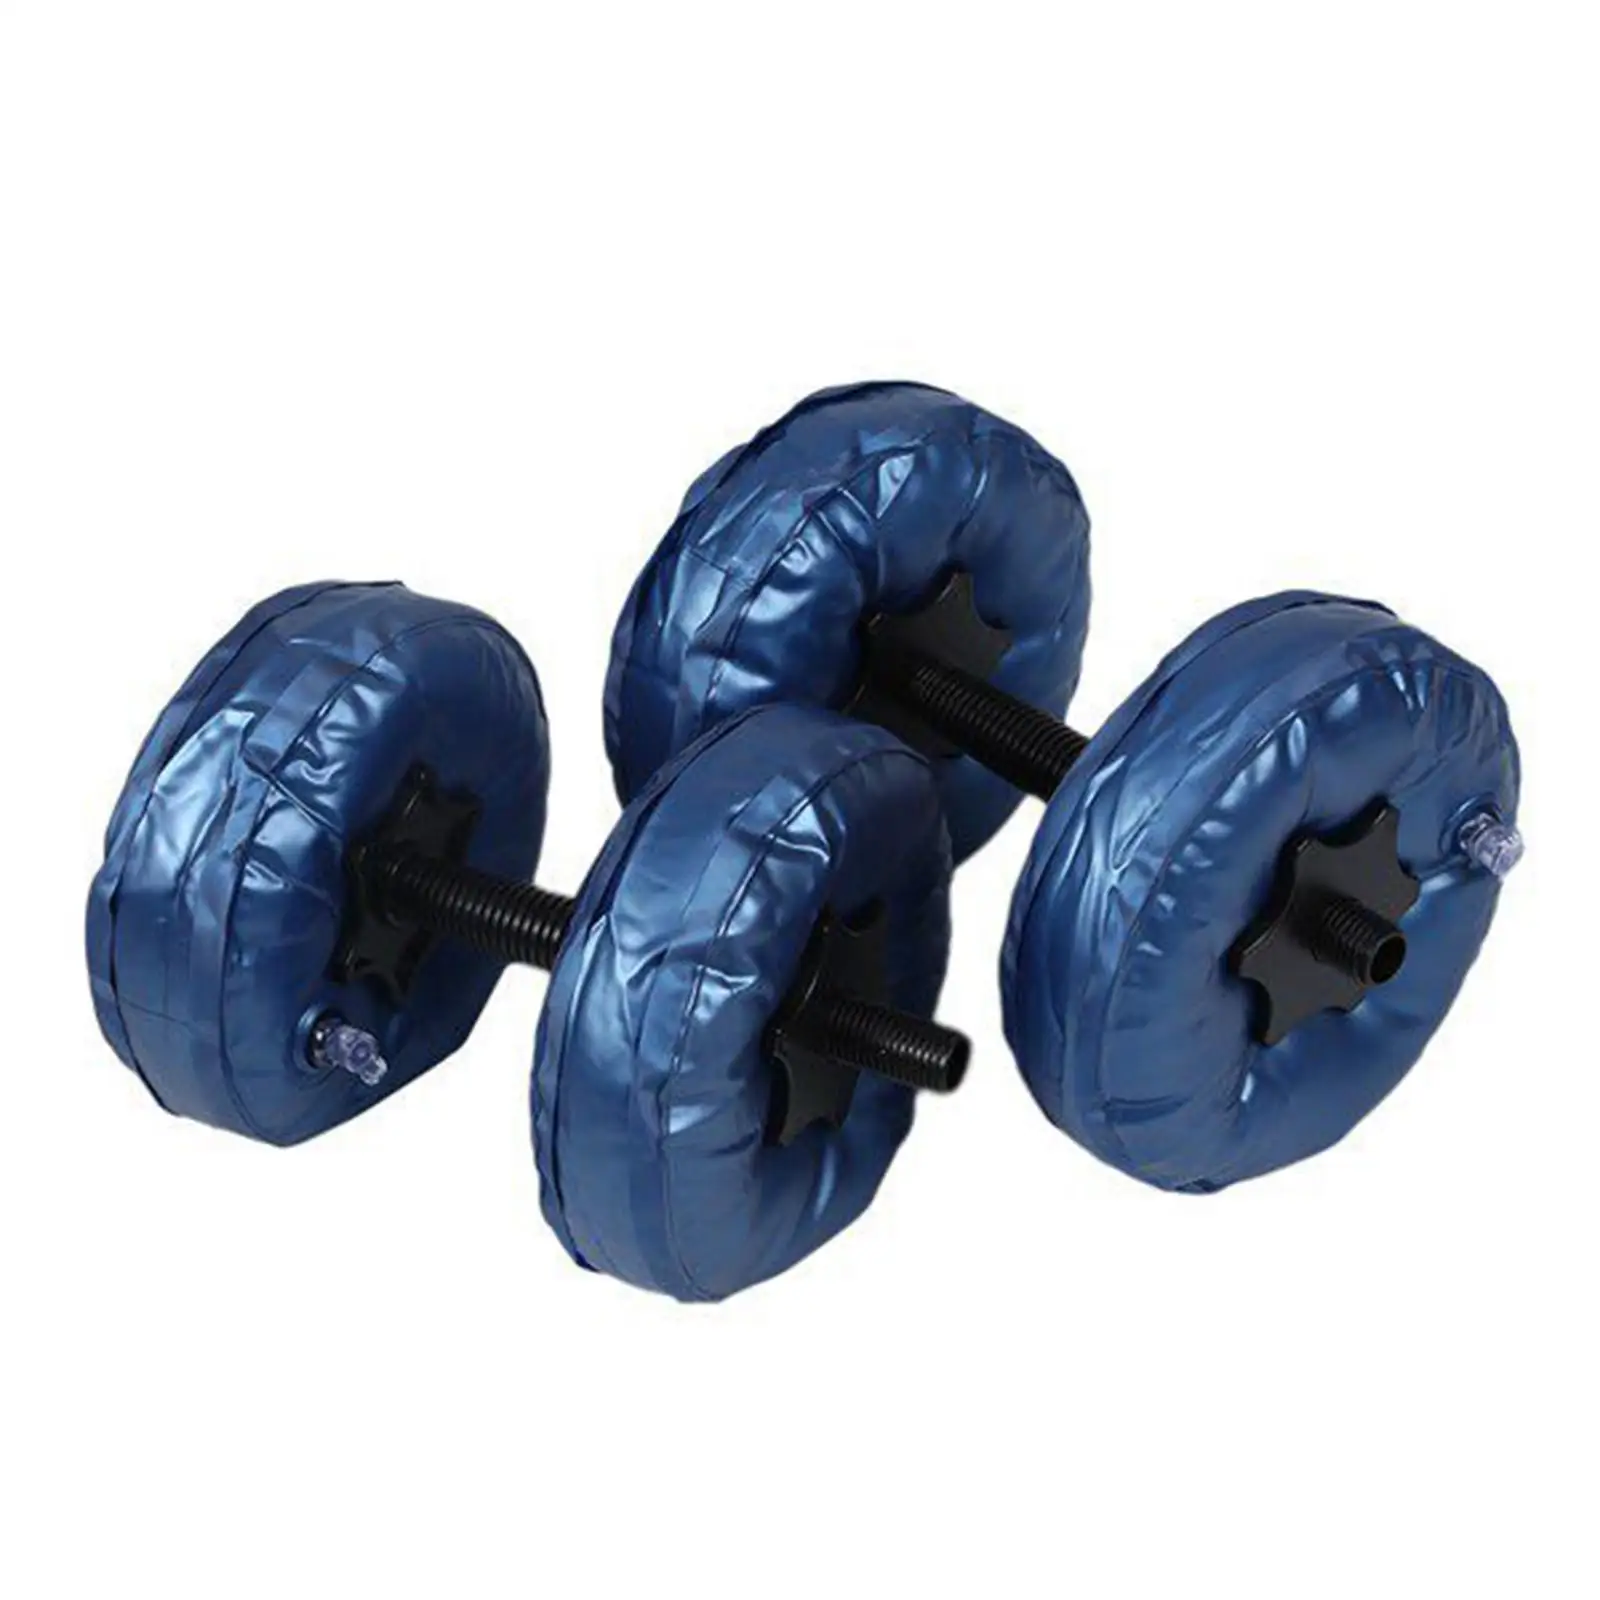 Portable Water Filled Dumbbell Adjustable Barbells for Gym Foldable Fitness